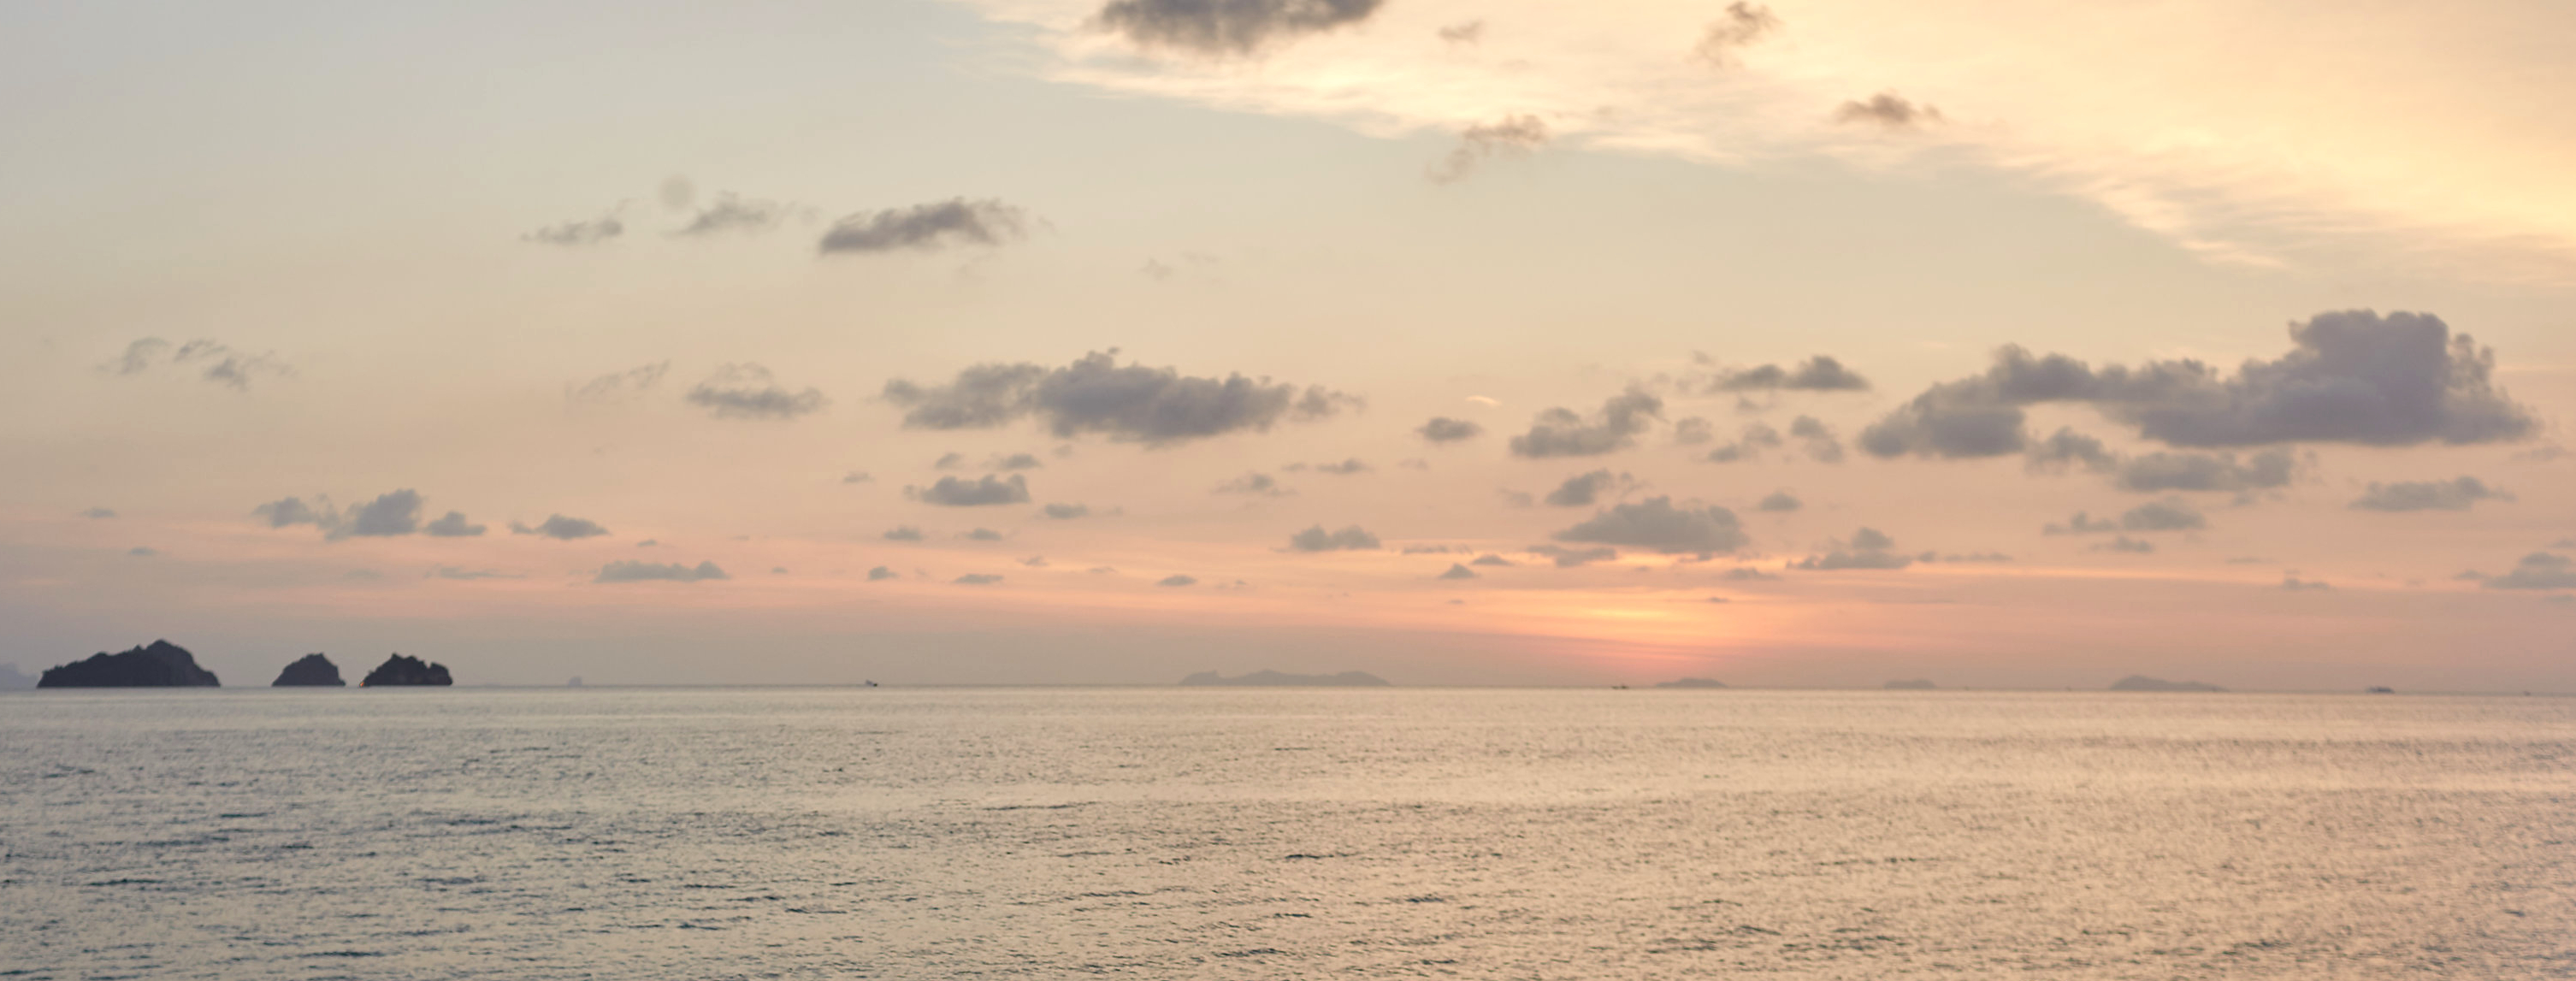 holistic clinic sunrise over the ocean